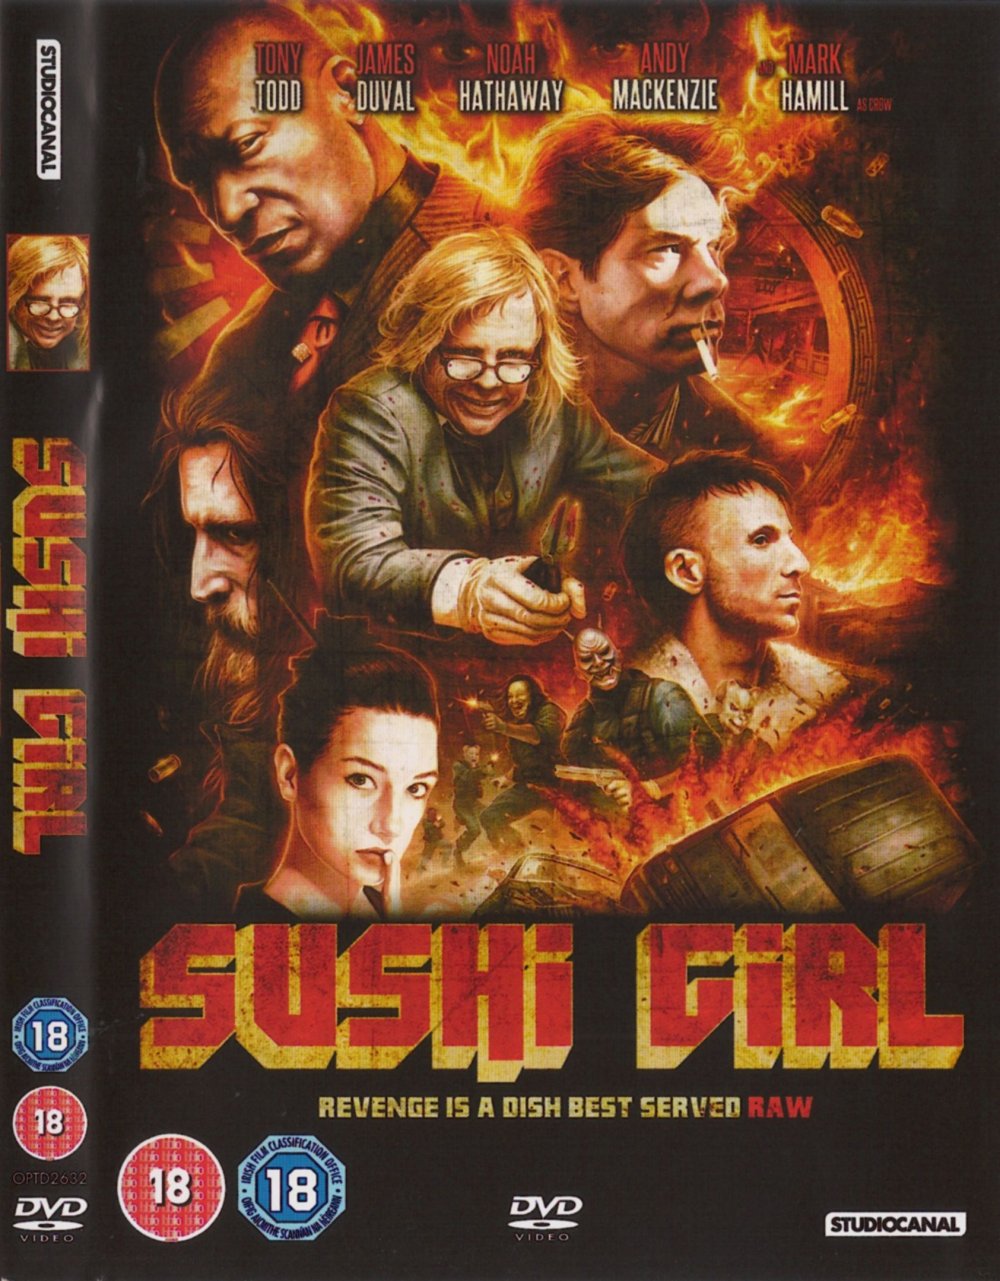 Sushi Girl - Region 2 - DVD Cover - Front
Keywords: ;media_cover